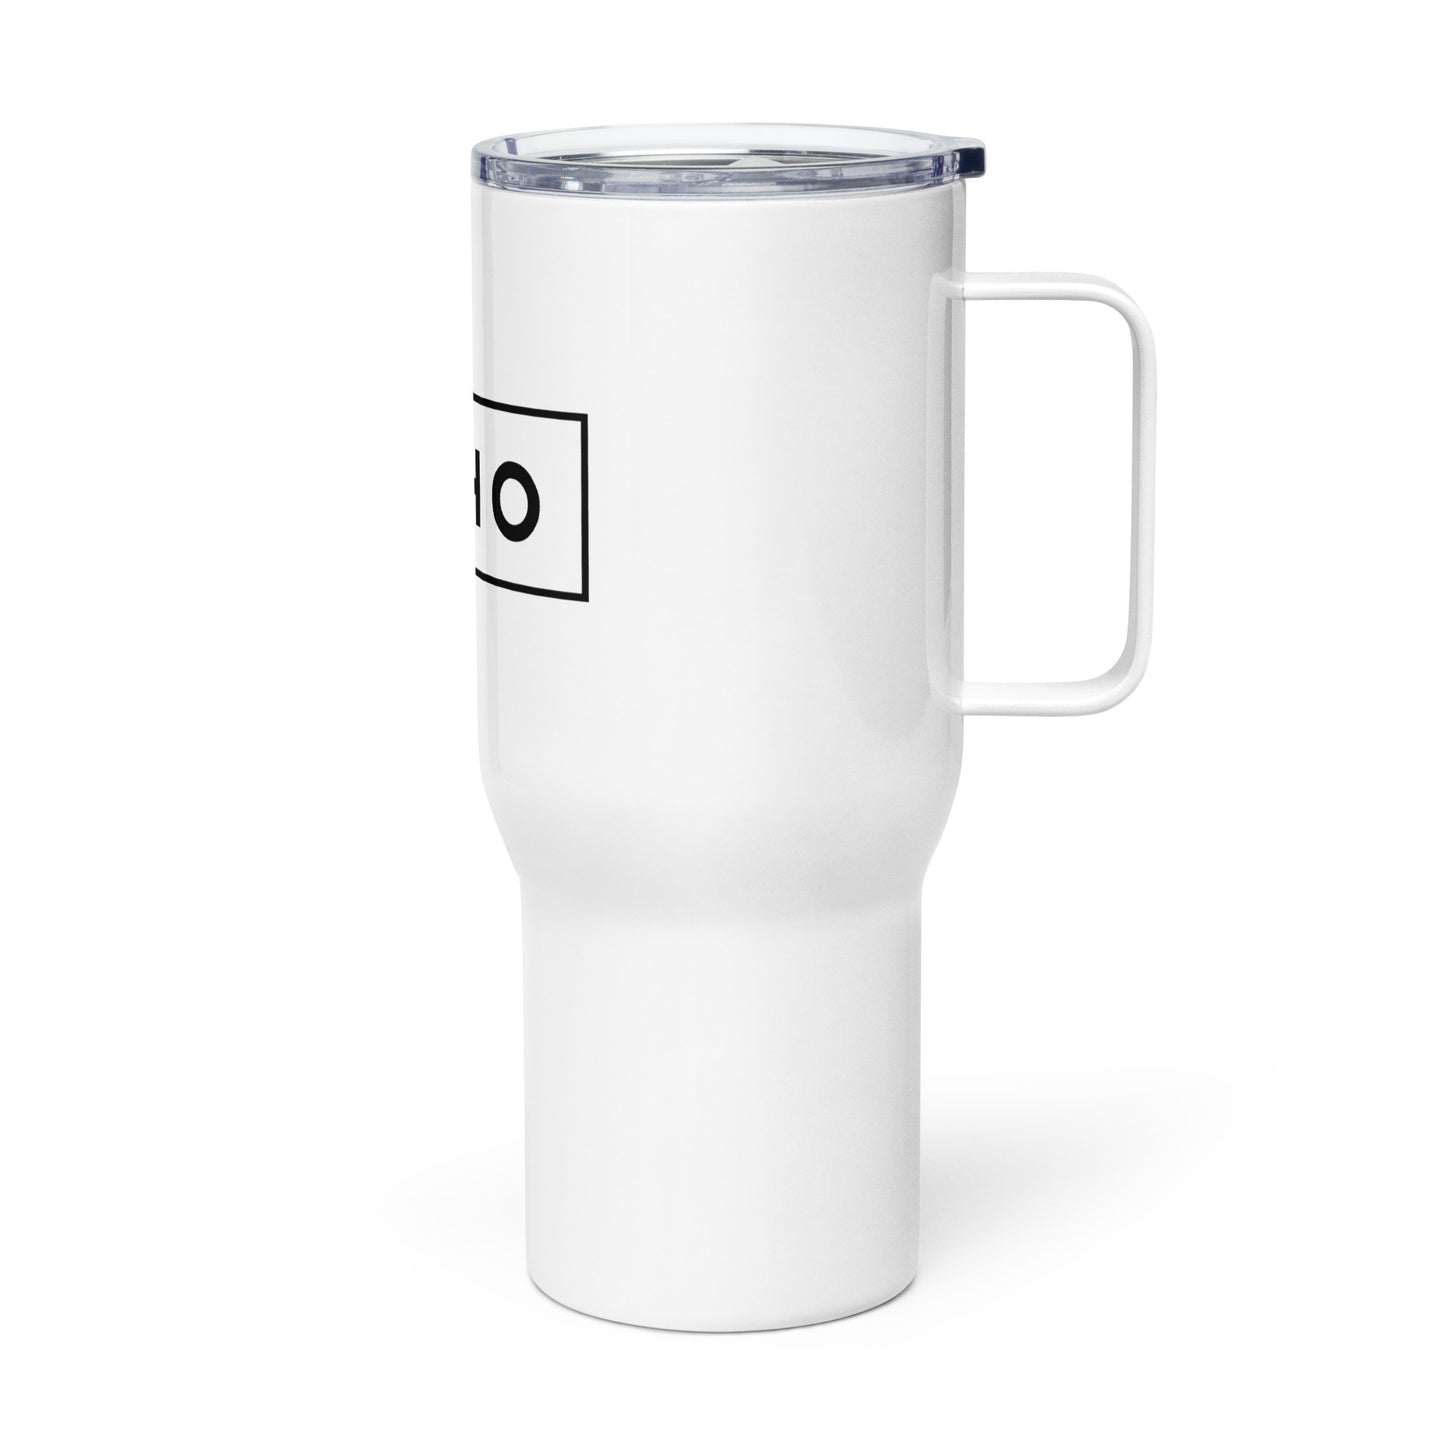 Ocho Travel mug with a handle